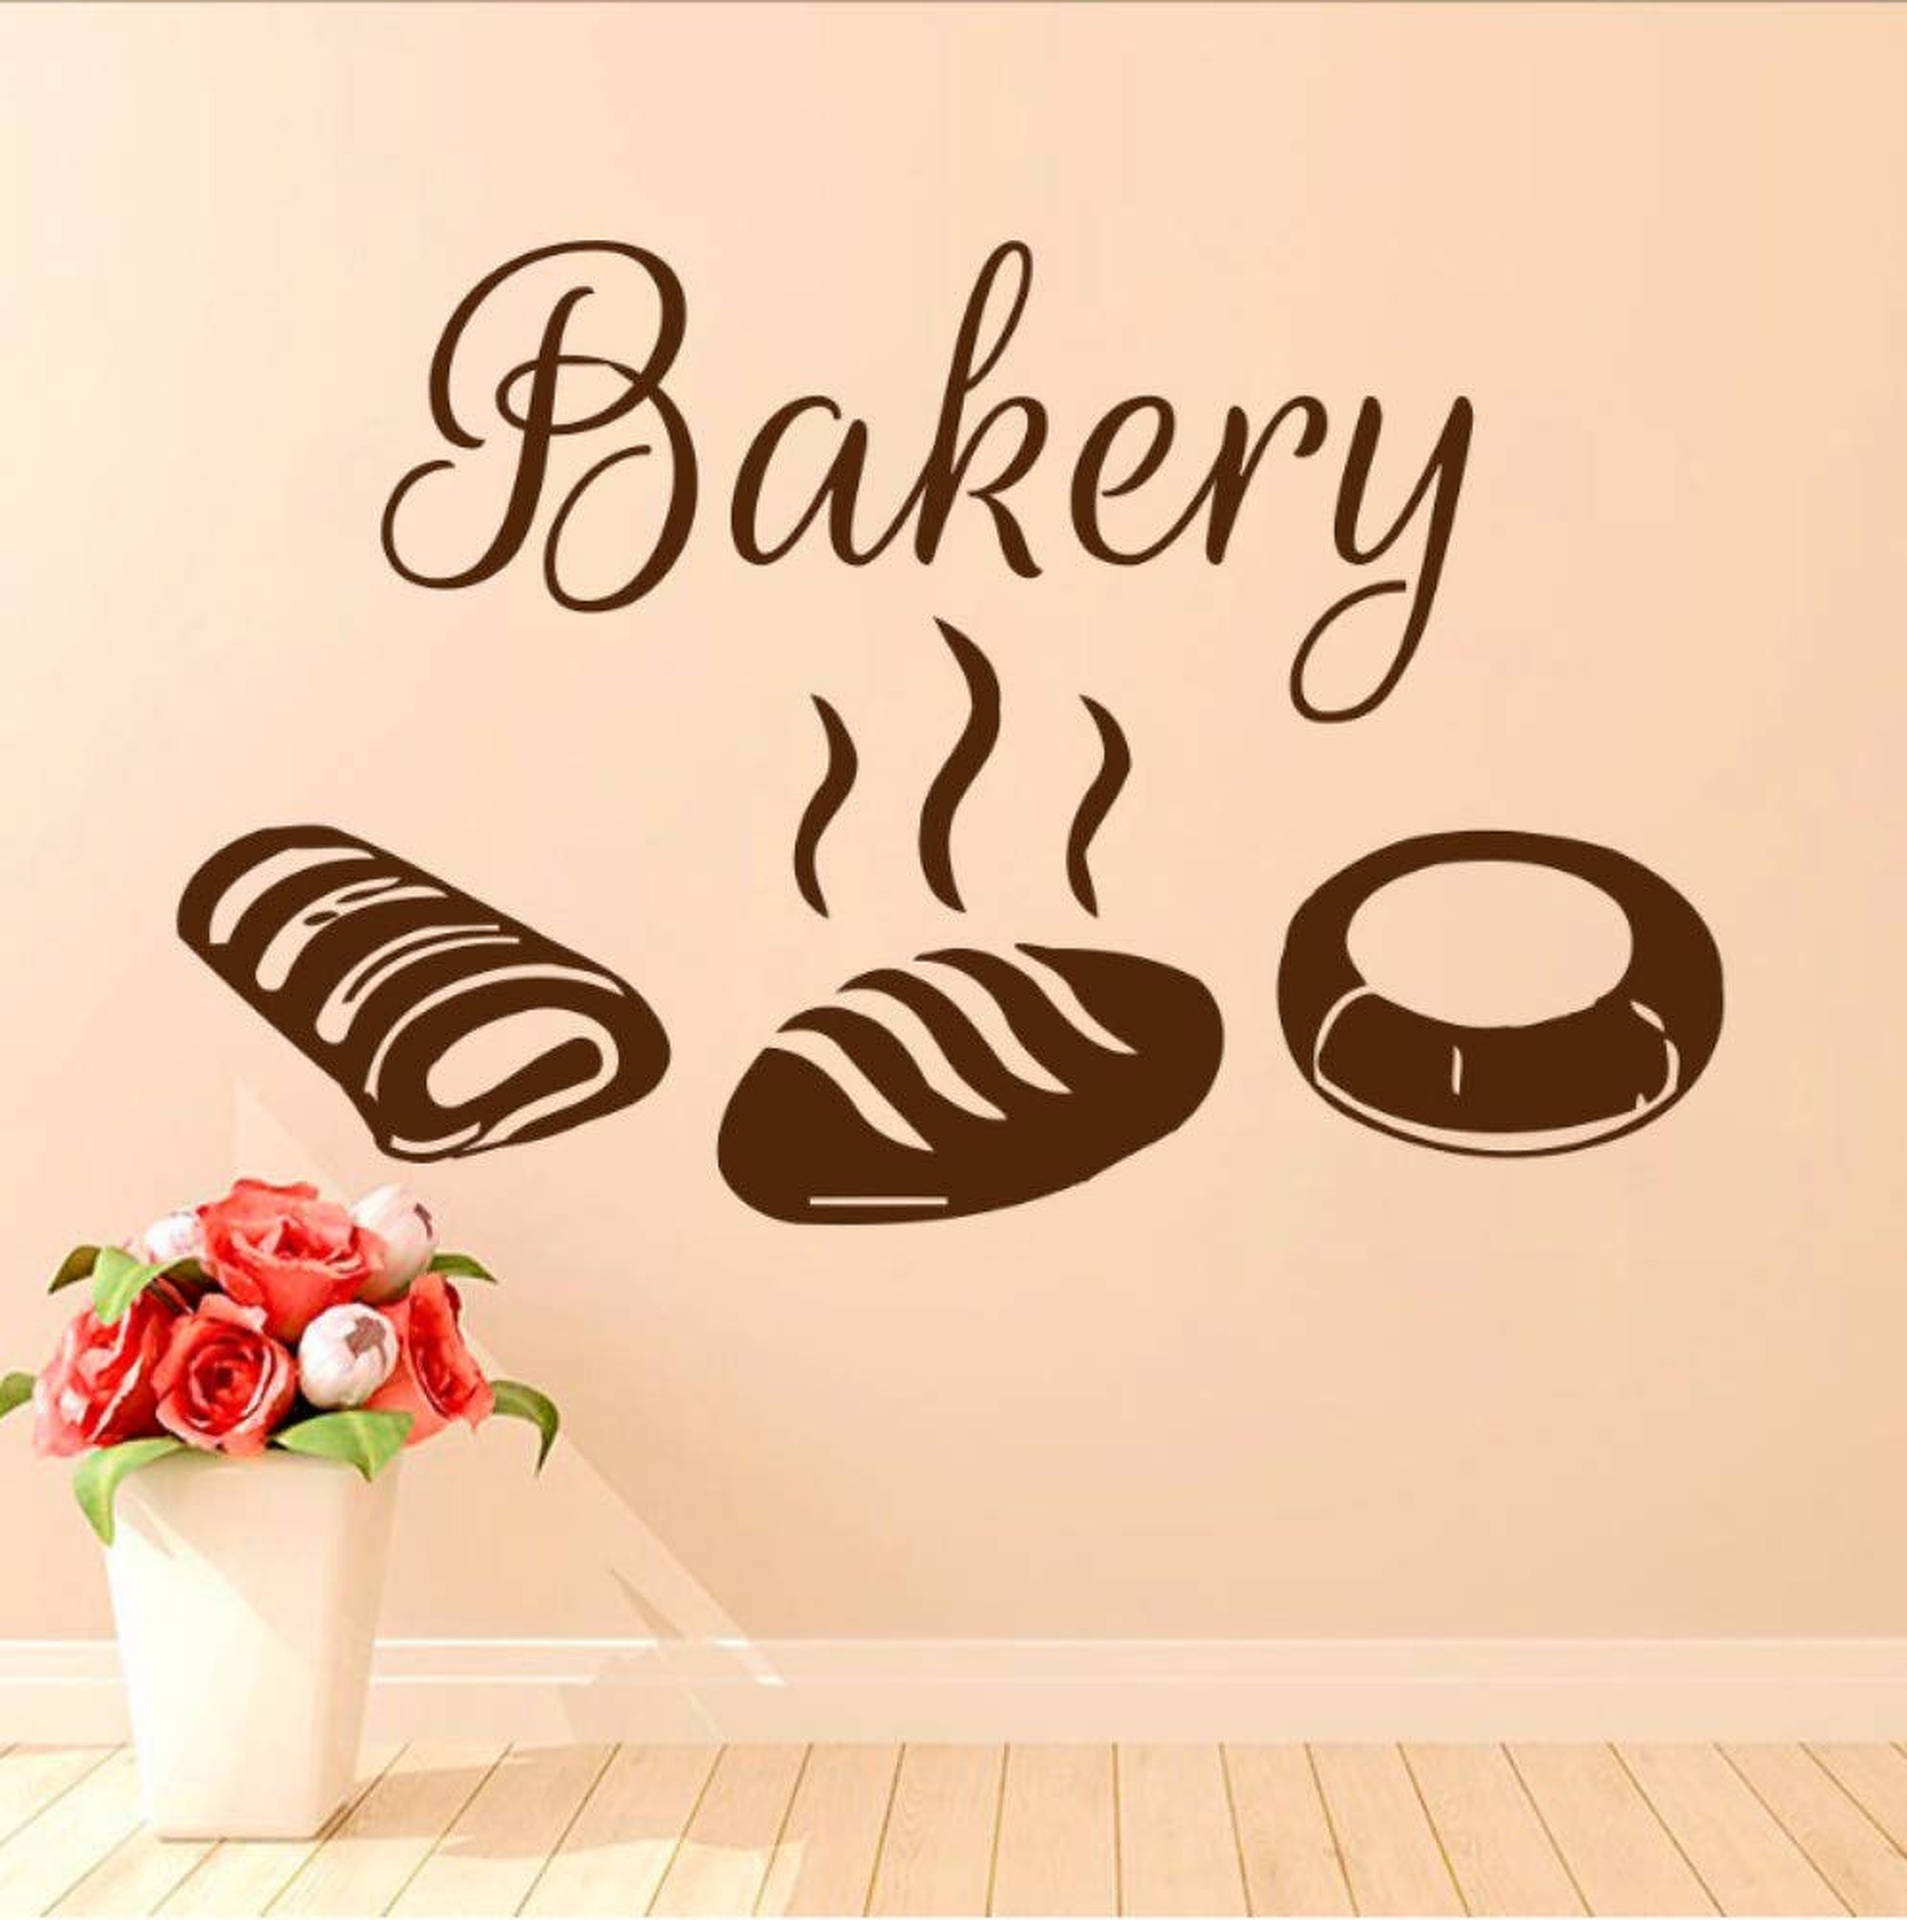 Bakery Wall Sticker Background